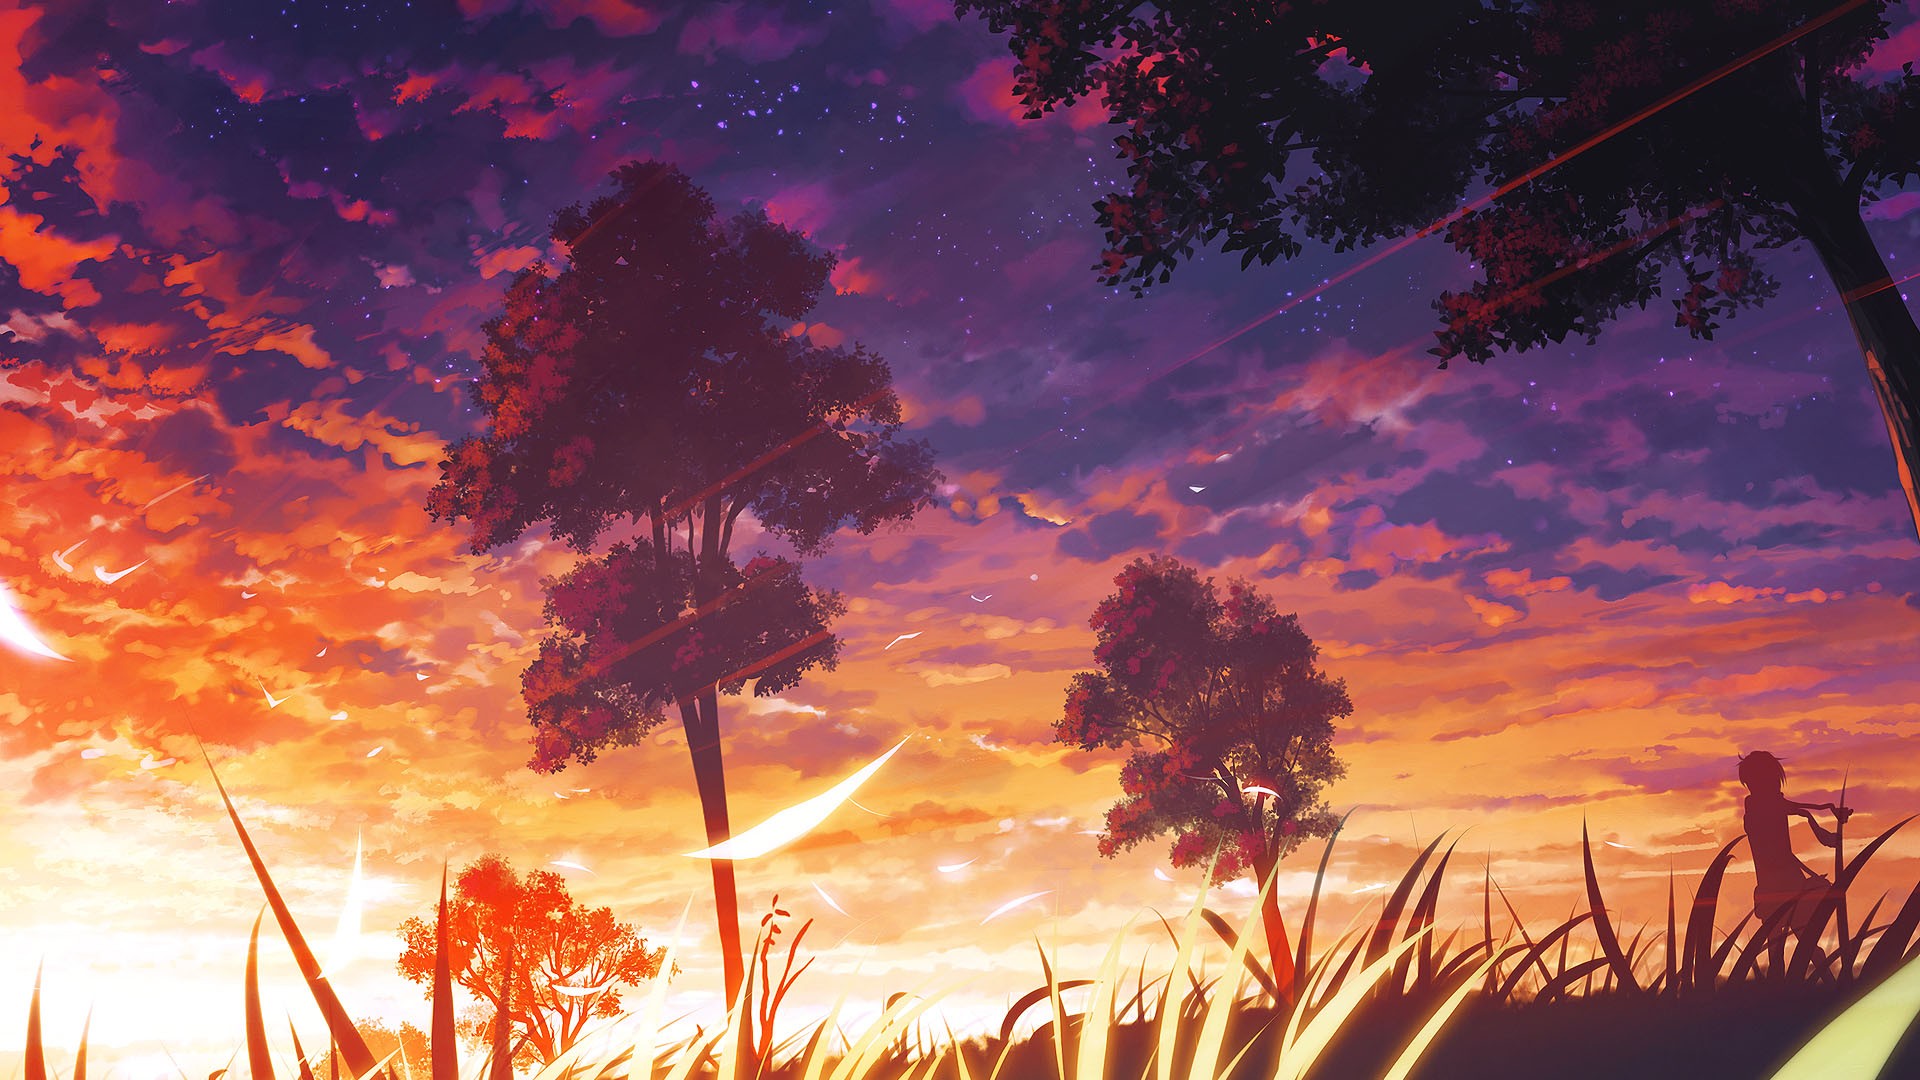 Stunning Anime Scenery wallpaper | 1920x1080 | #14925